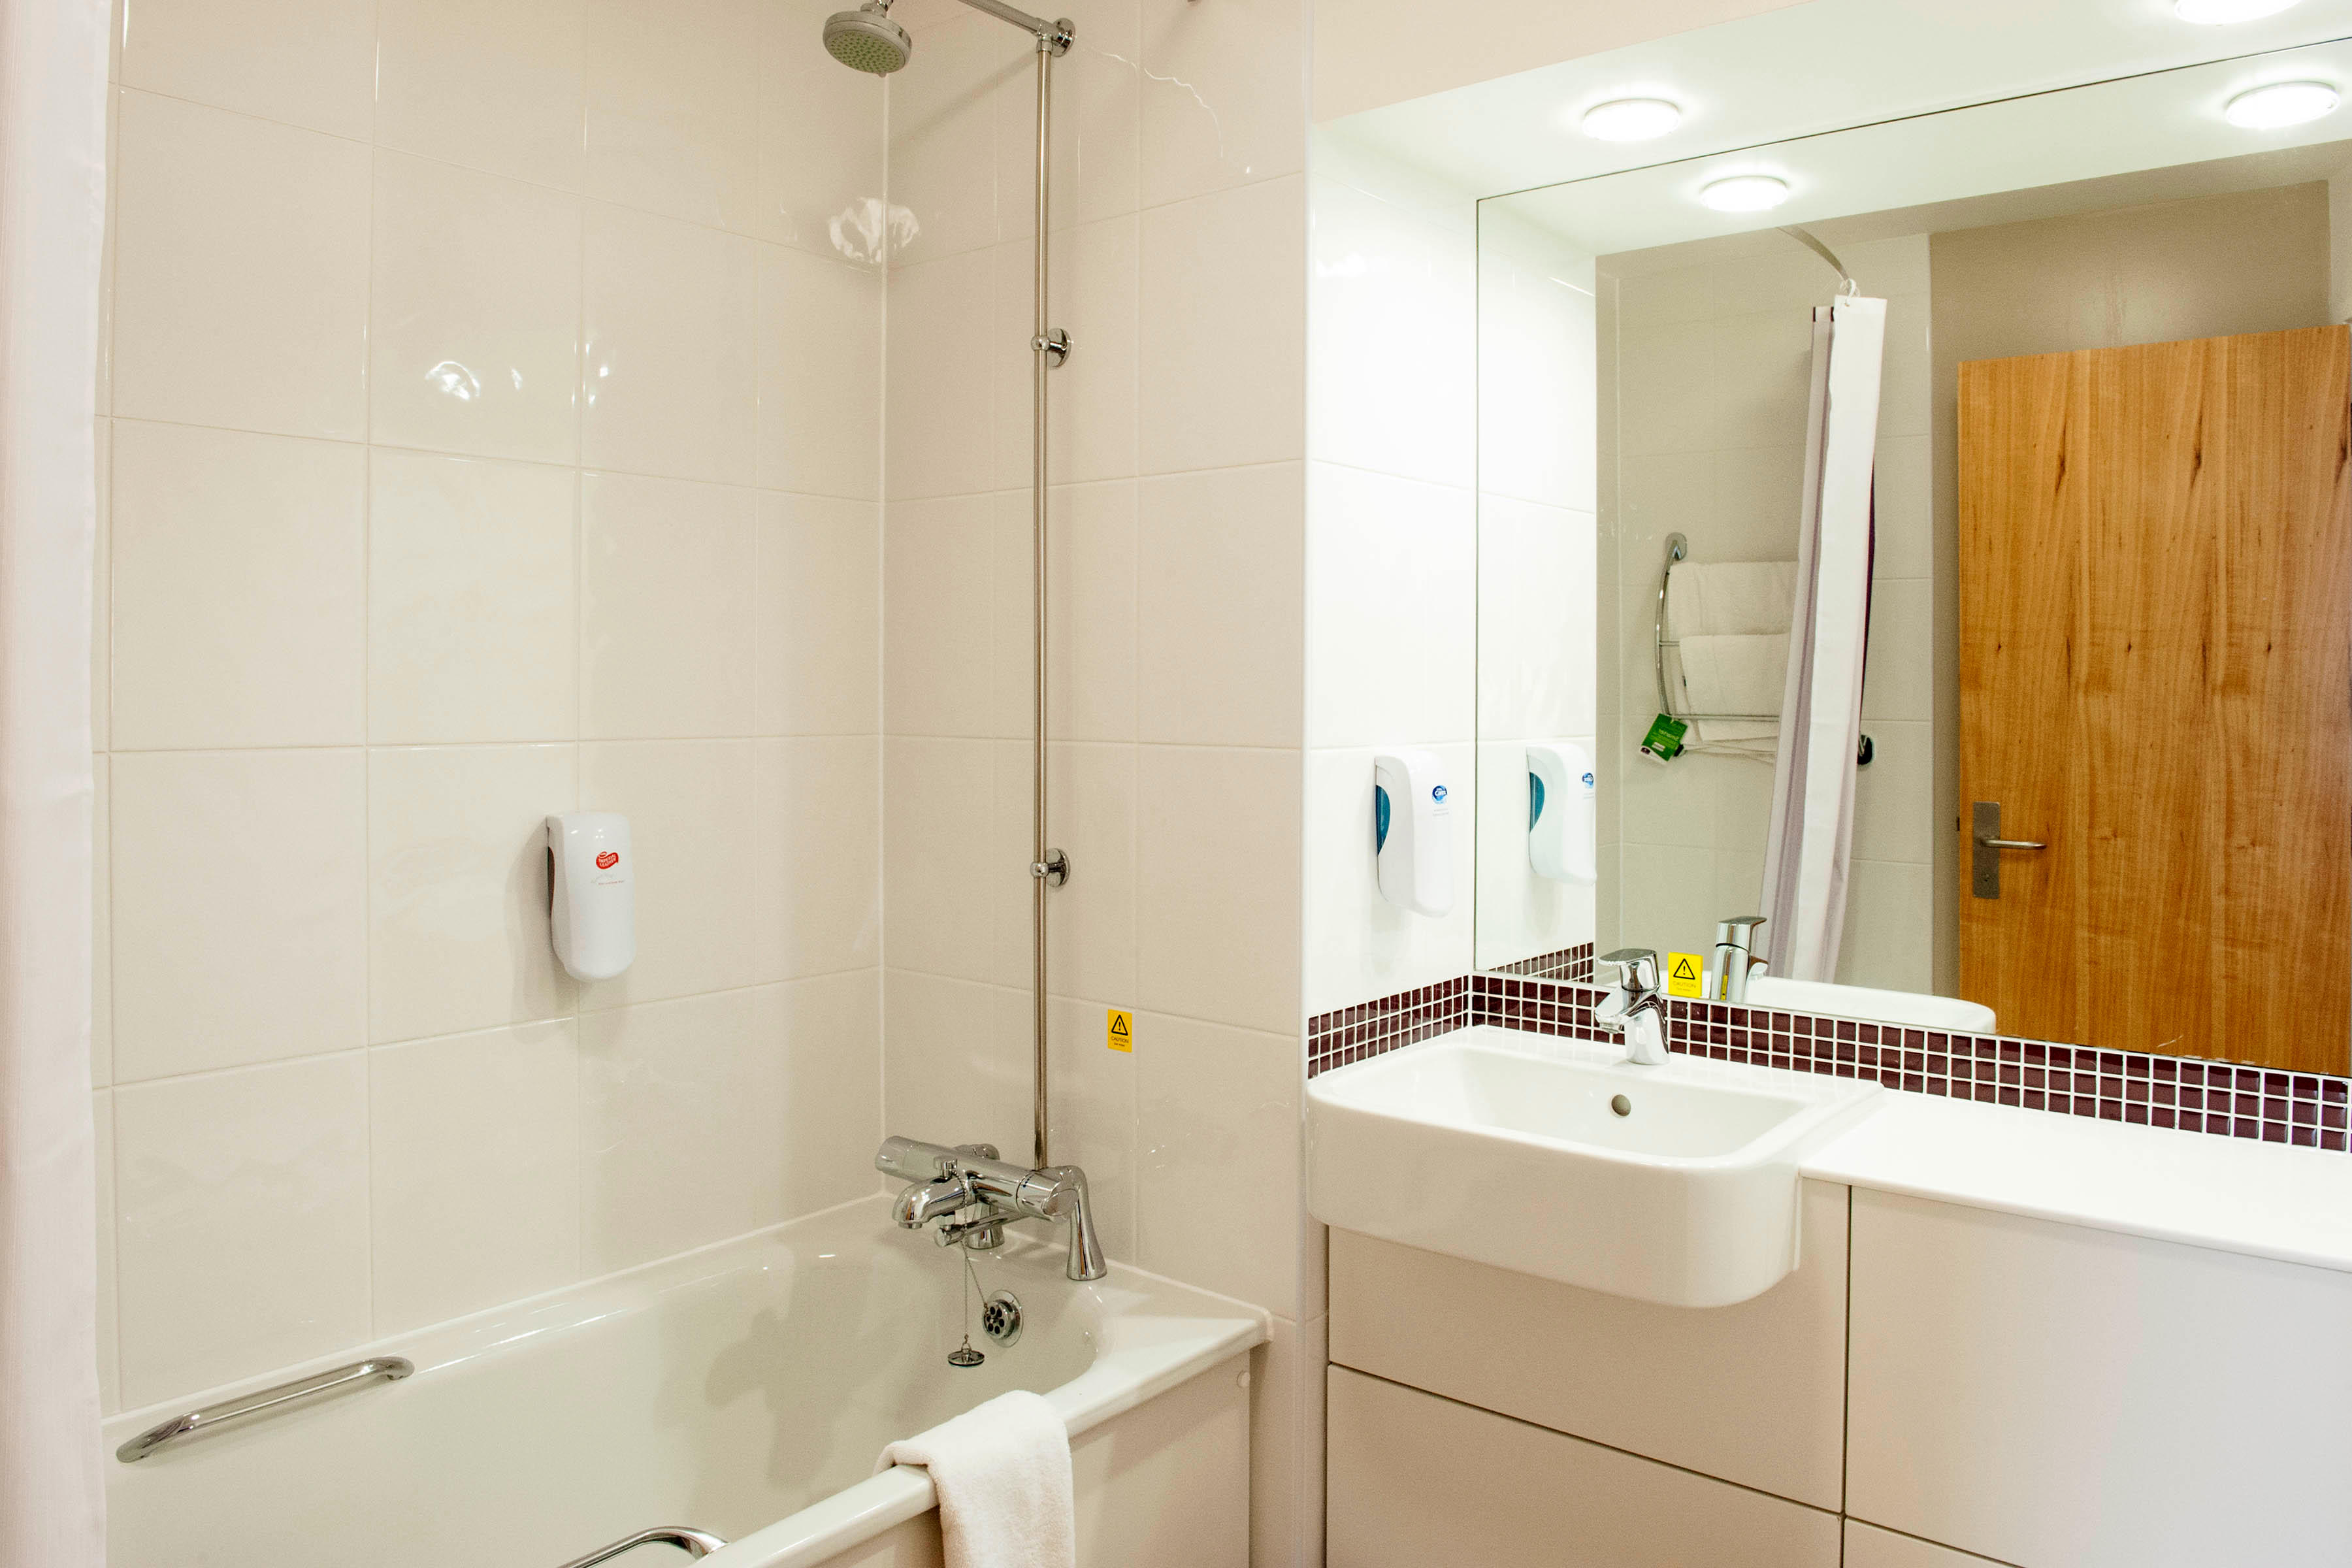 Premier Inn bathroom Premier Inn Dudley Town Centre hotel Dudley 03333 219306